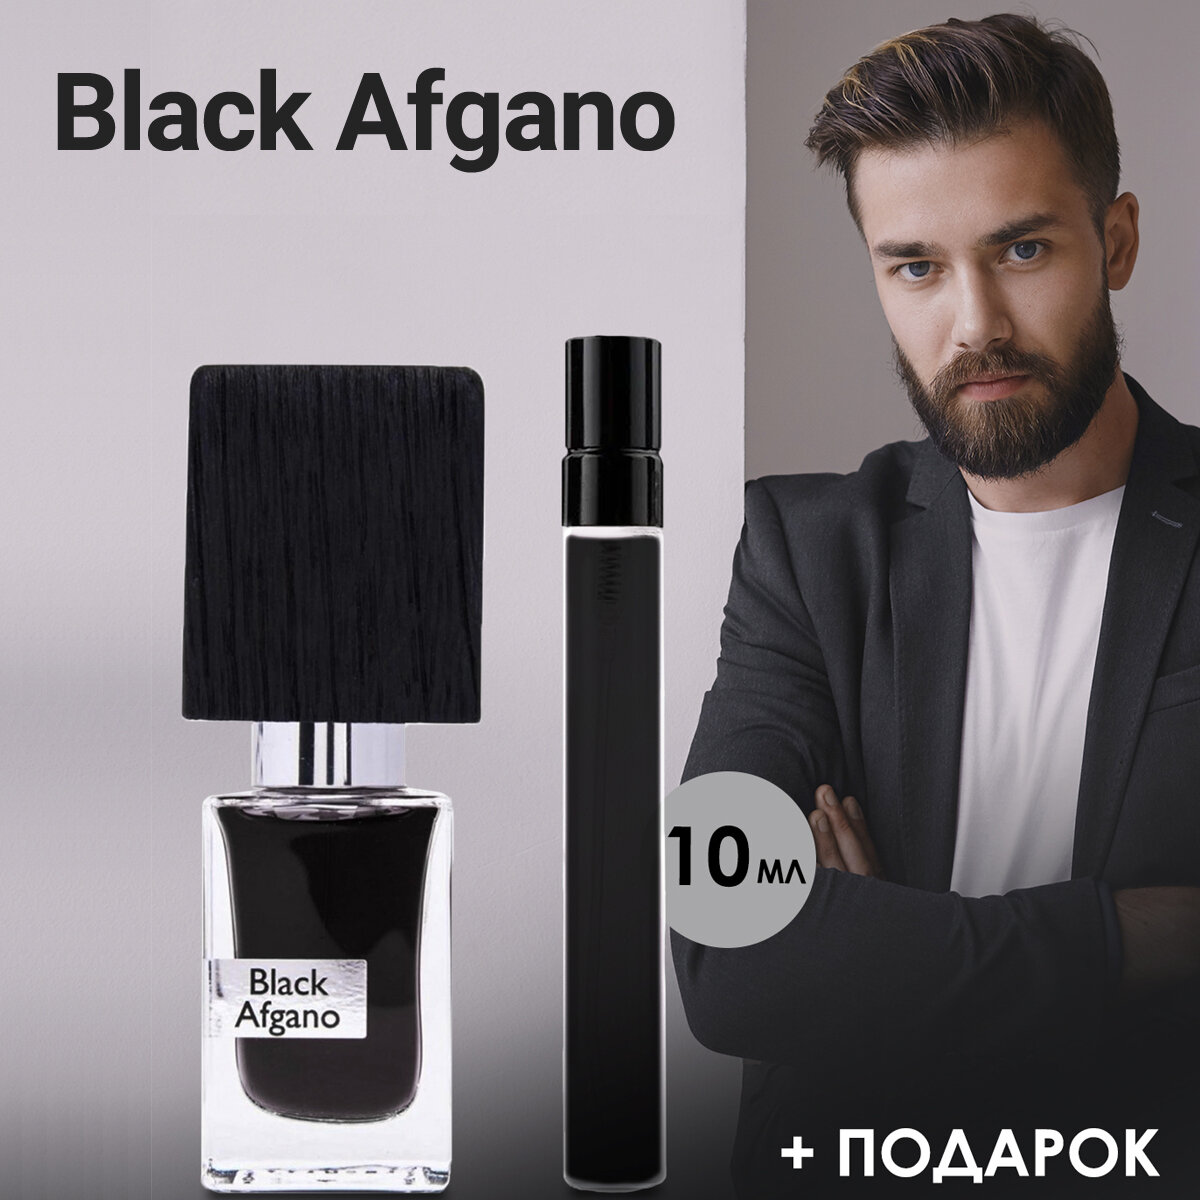 "Black Afgano" - Духи унисекс 10 мл + подарок 1 мл другого аромата